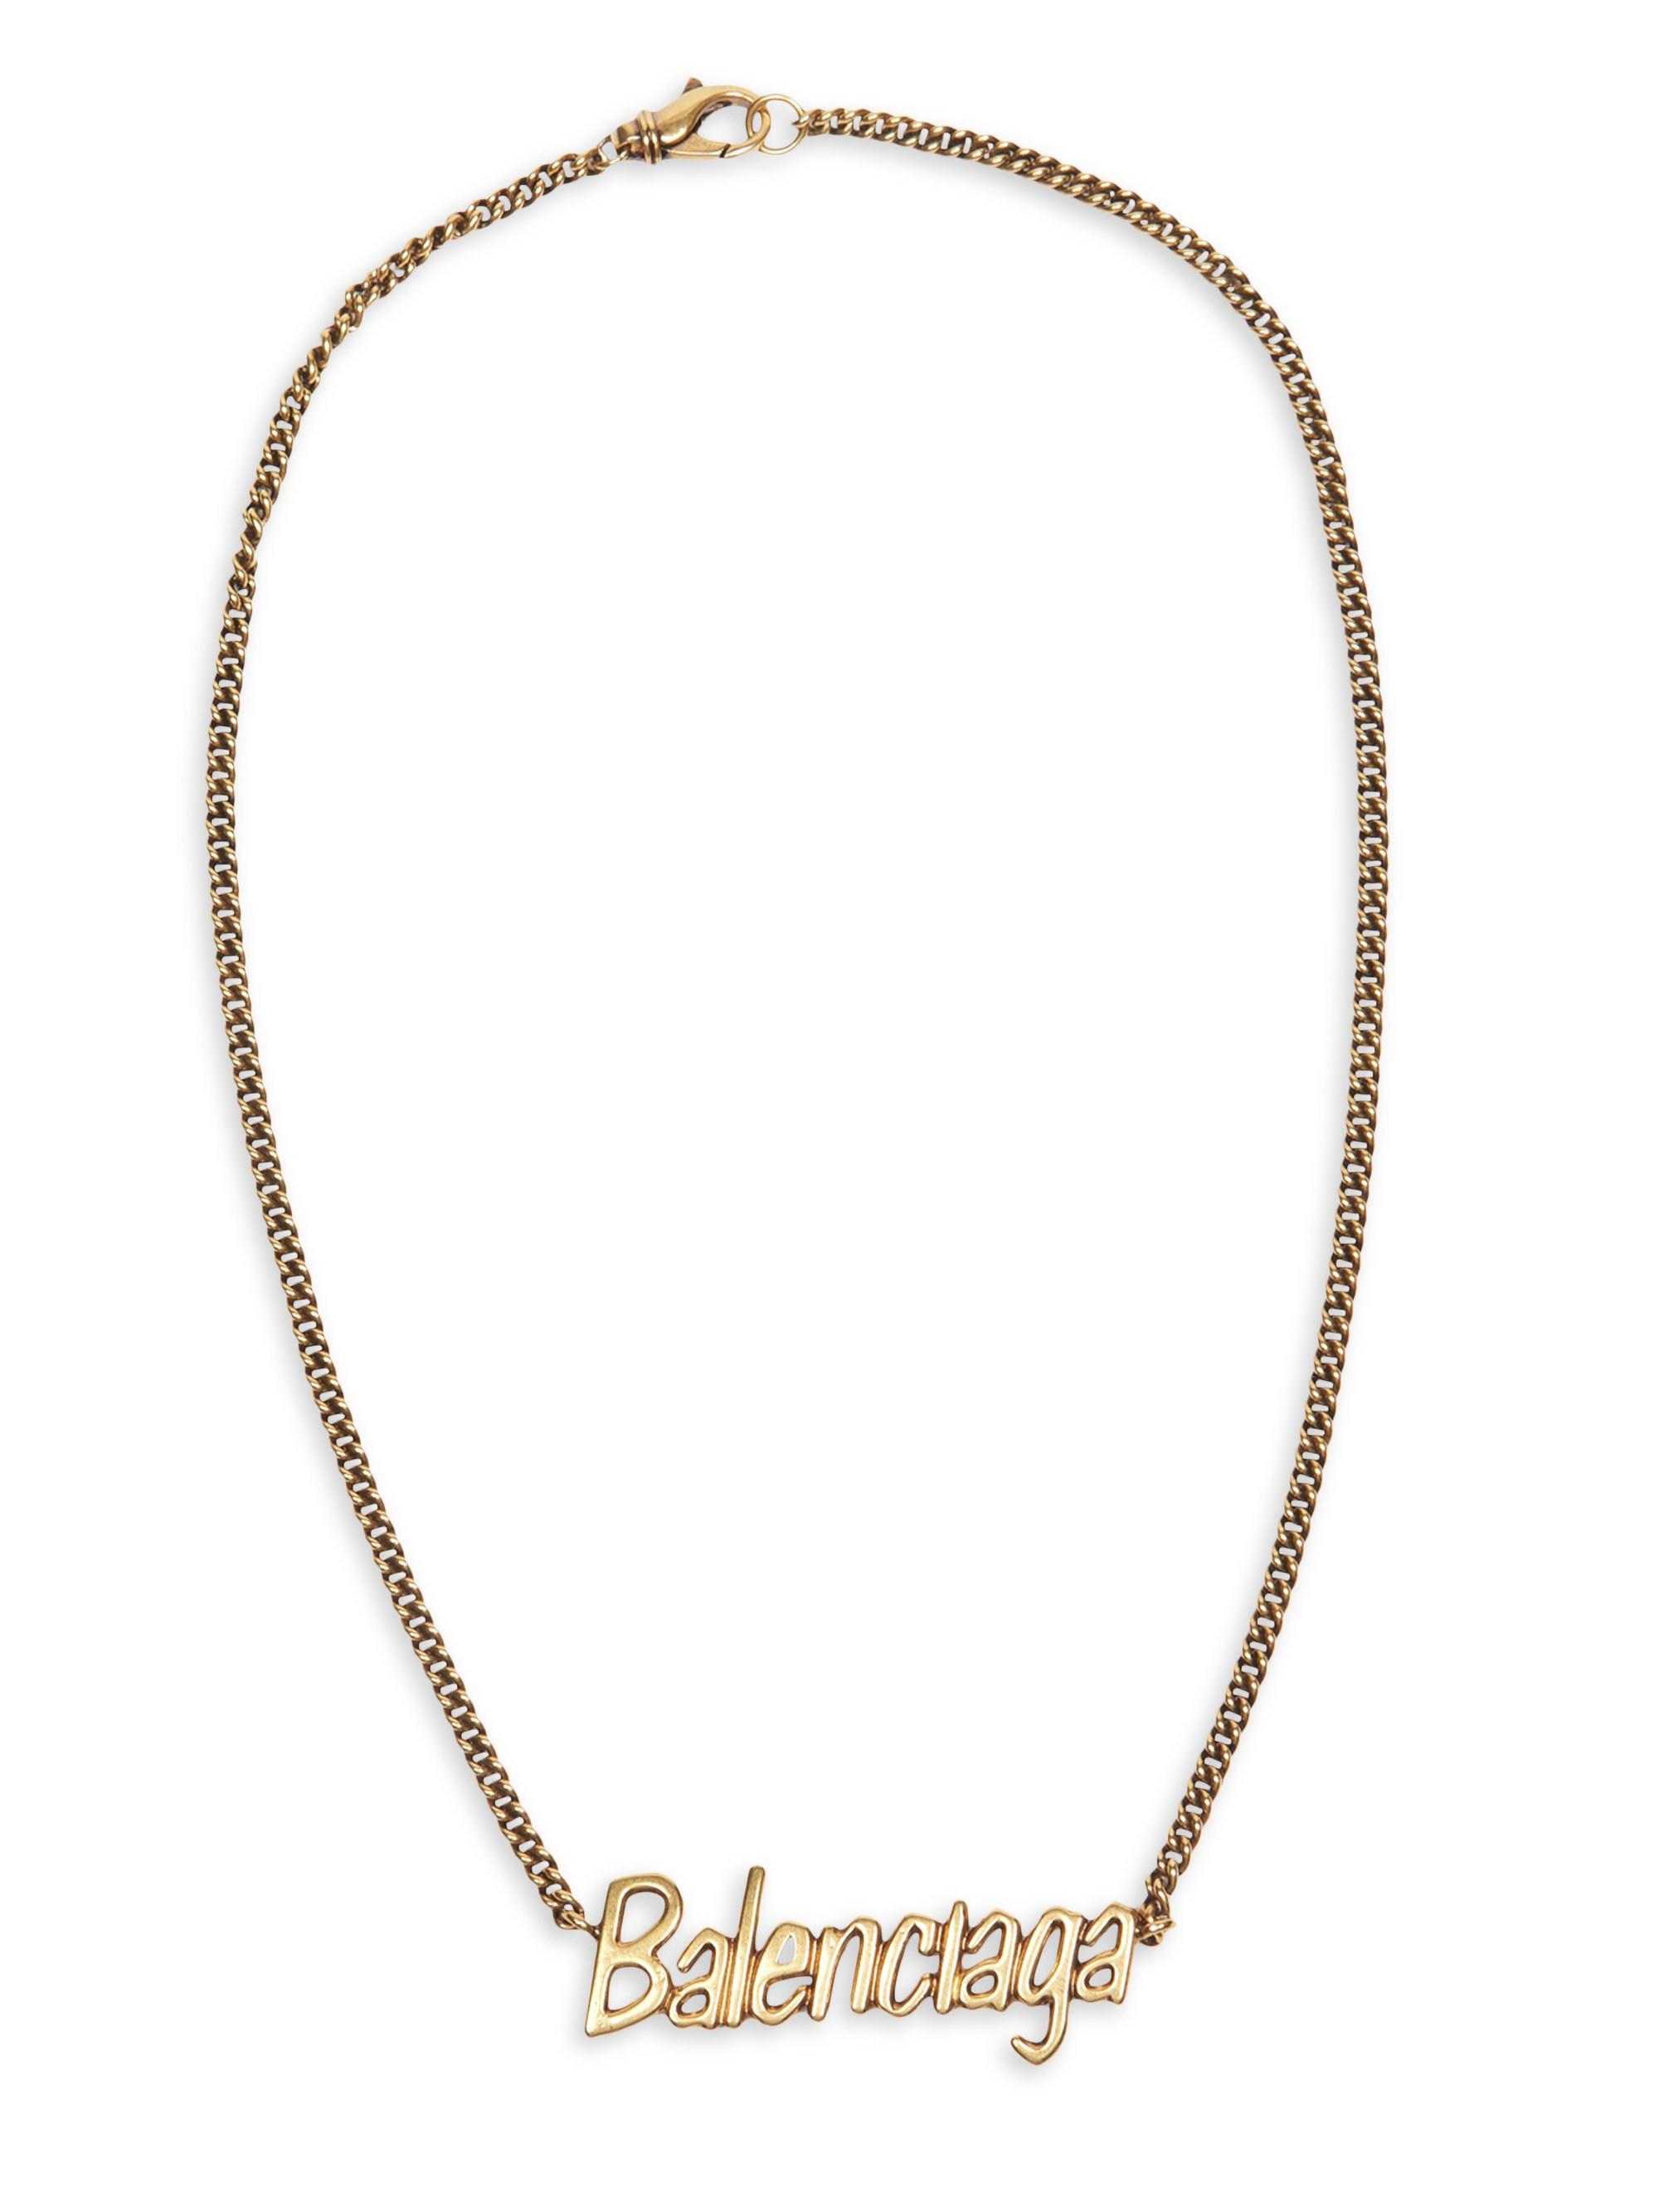 Balenciaga Typo Necklace in Metallic for Men - Lyst